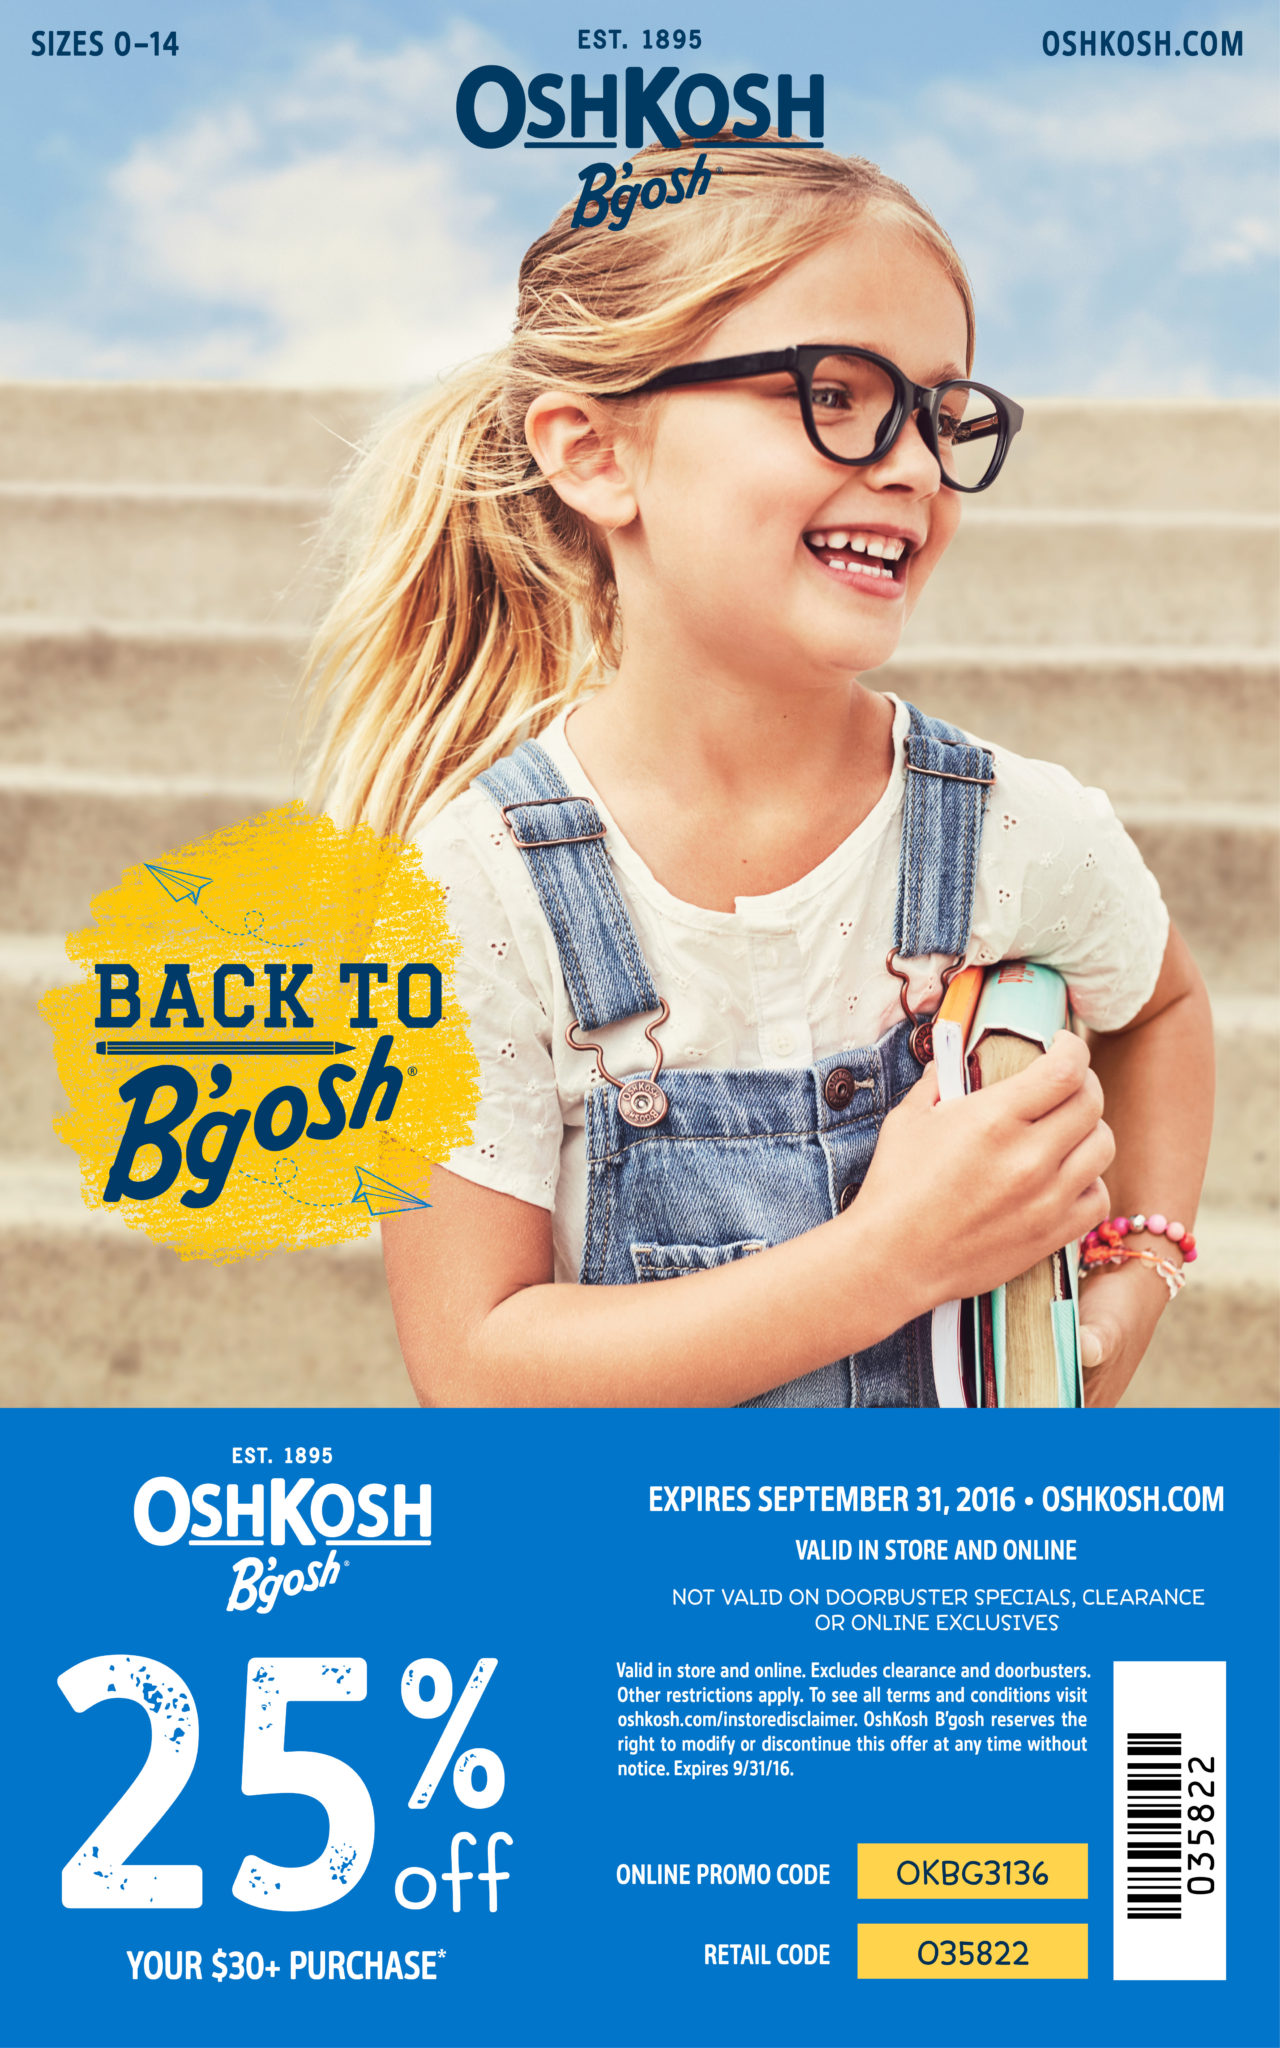 back to school toddler fashion with oshkosh b'gosh on allweareblog.com #backtobgosh